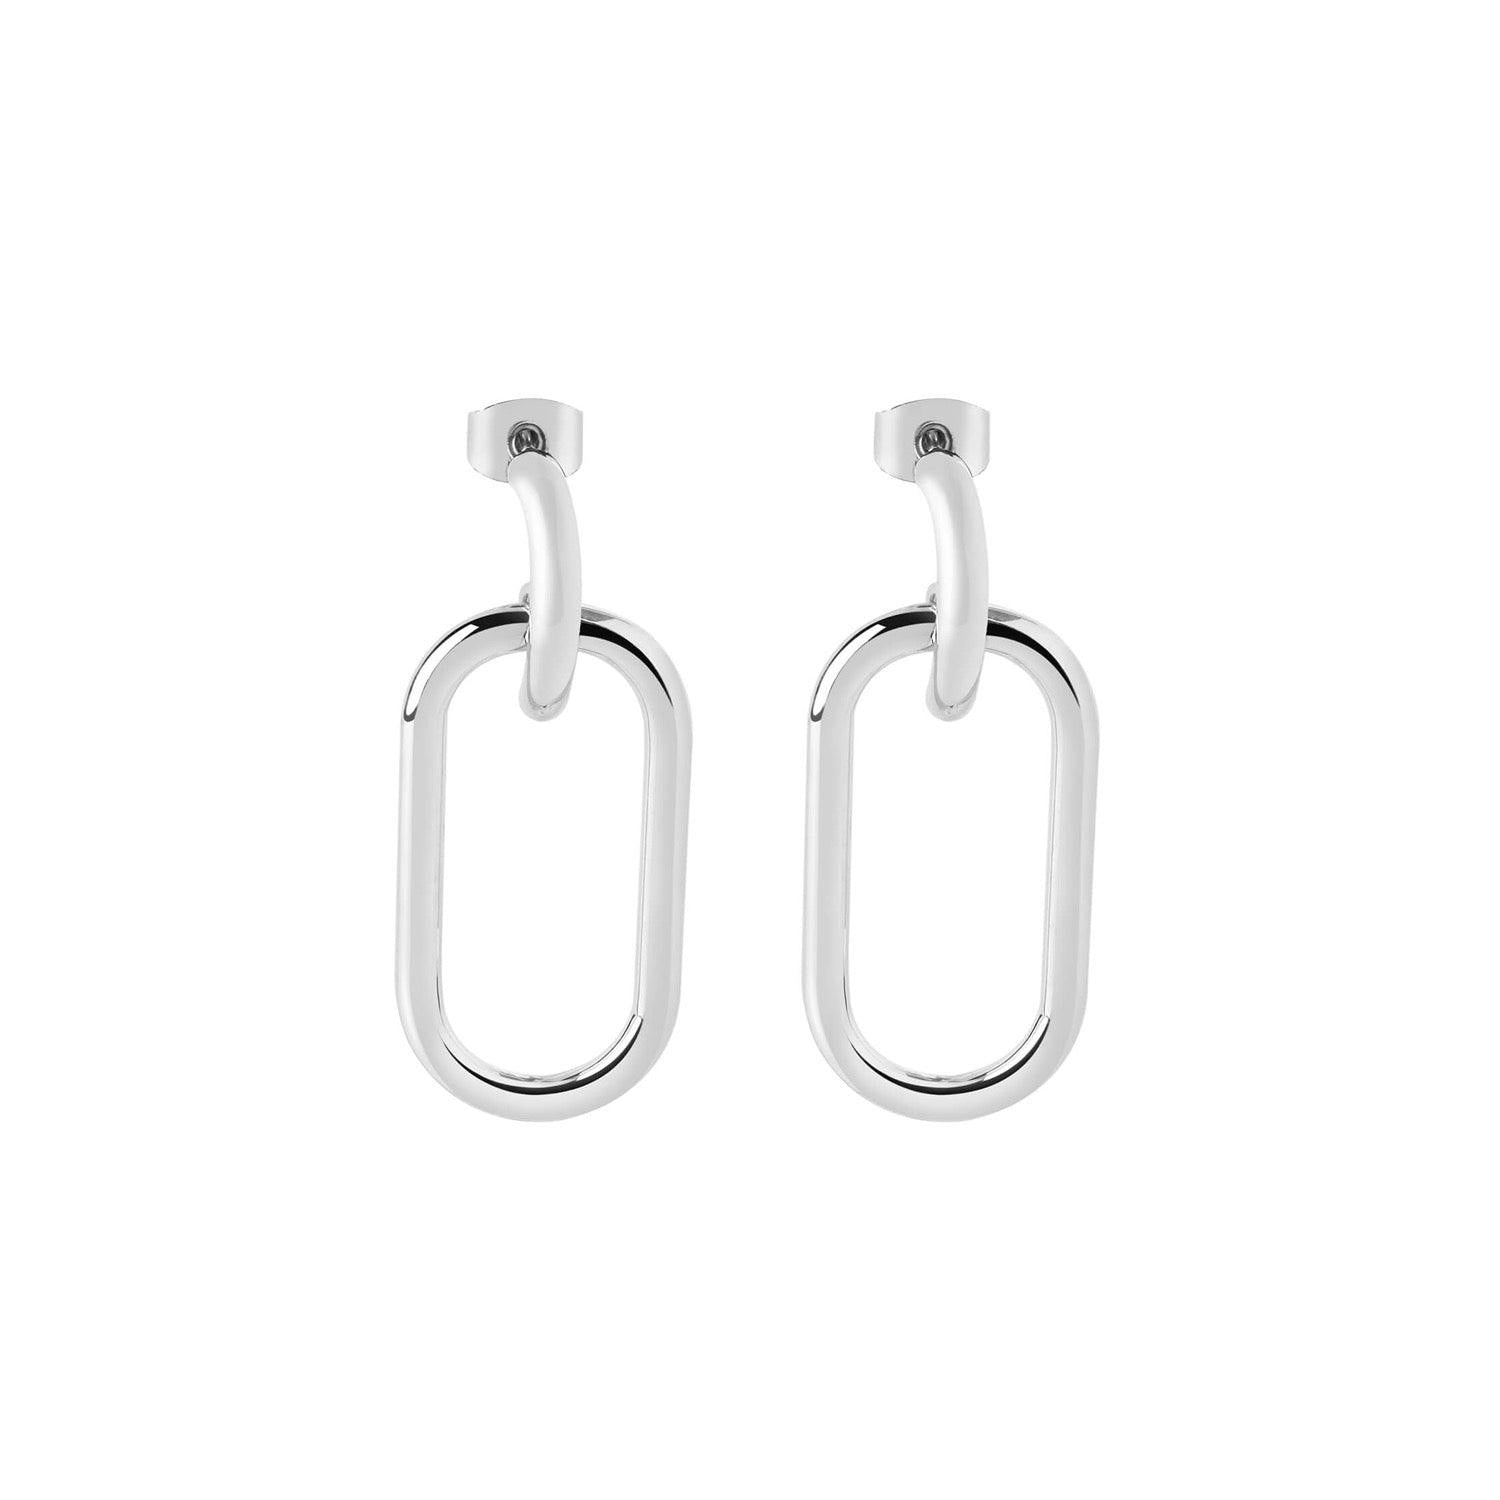 Silver Plated Oval Earrings